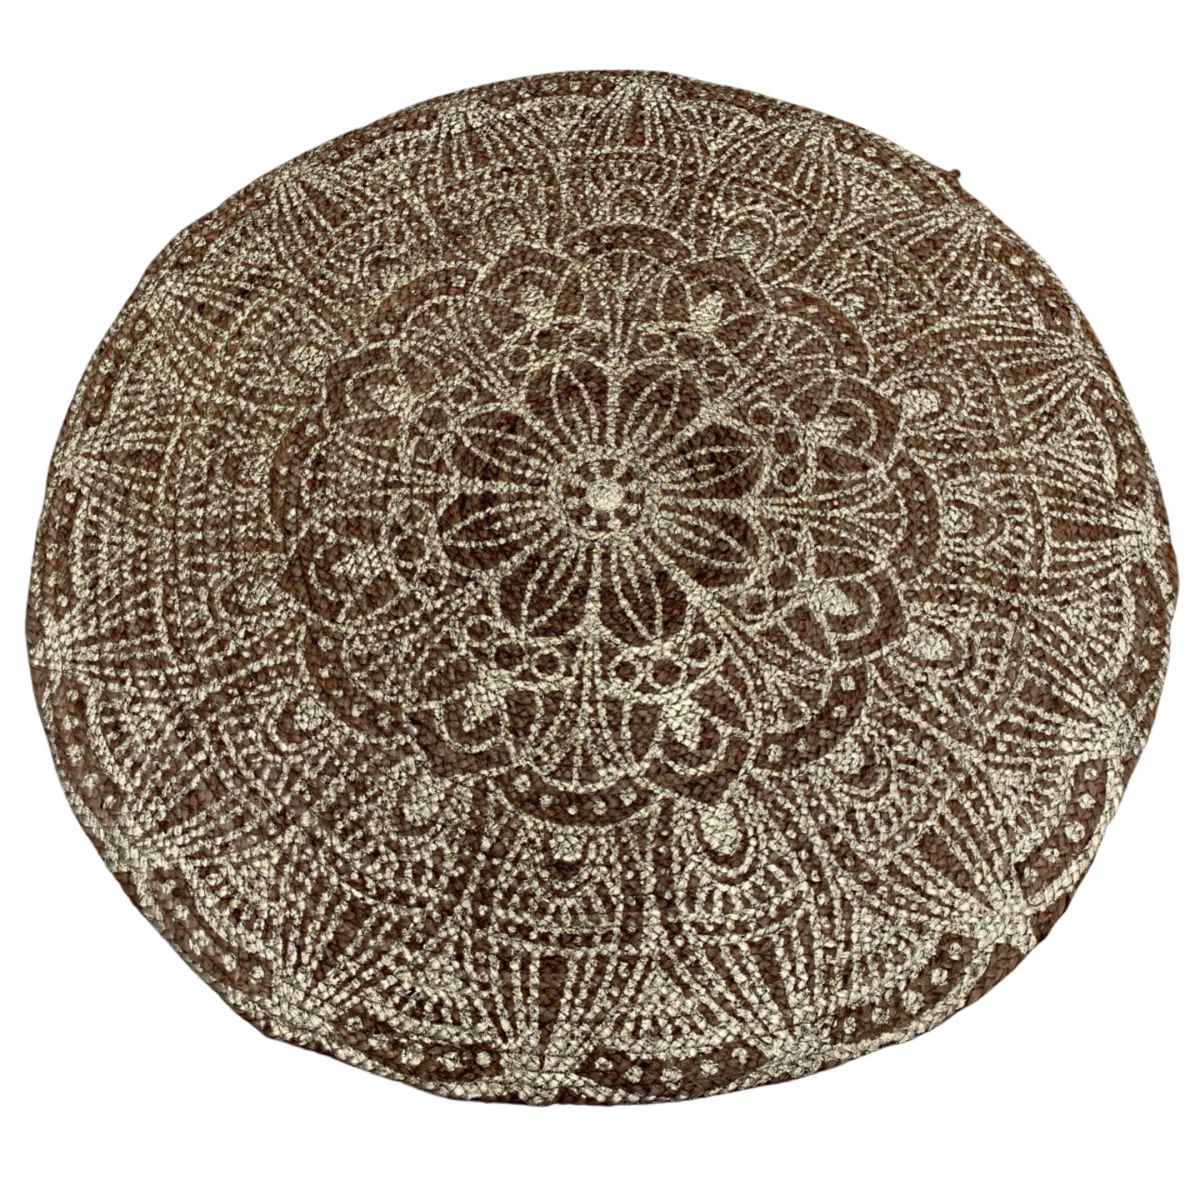 rug oriental bohemain braided hemp with golden lotus flower print 120cm